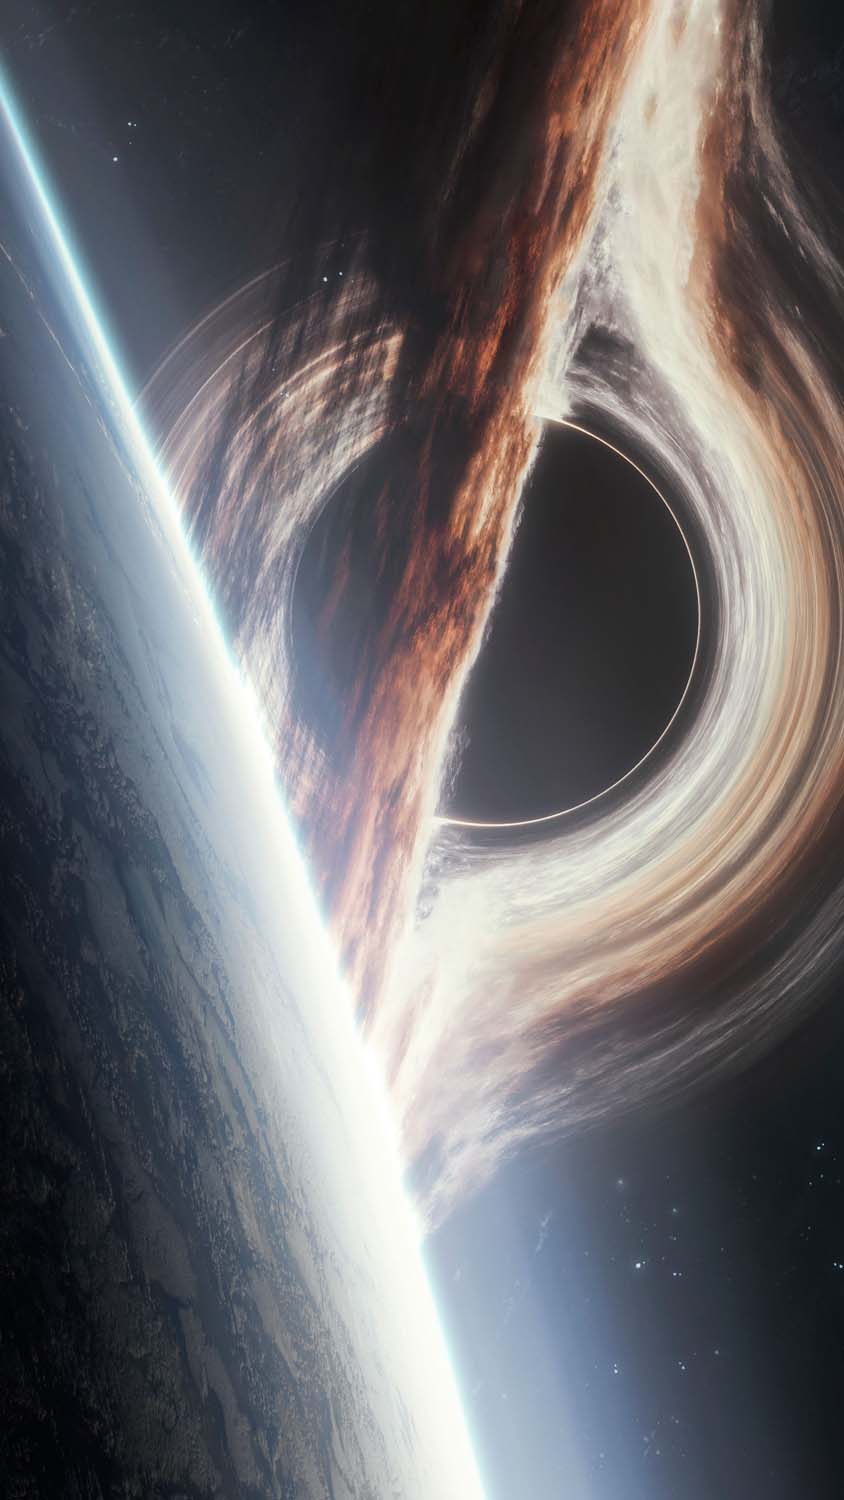 File:Black hole (NASA).jpg - Wikipedia